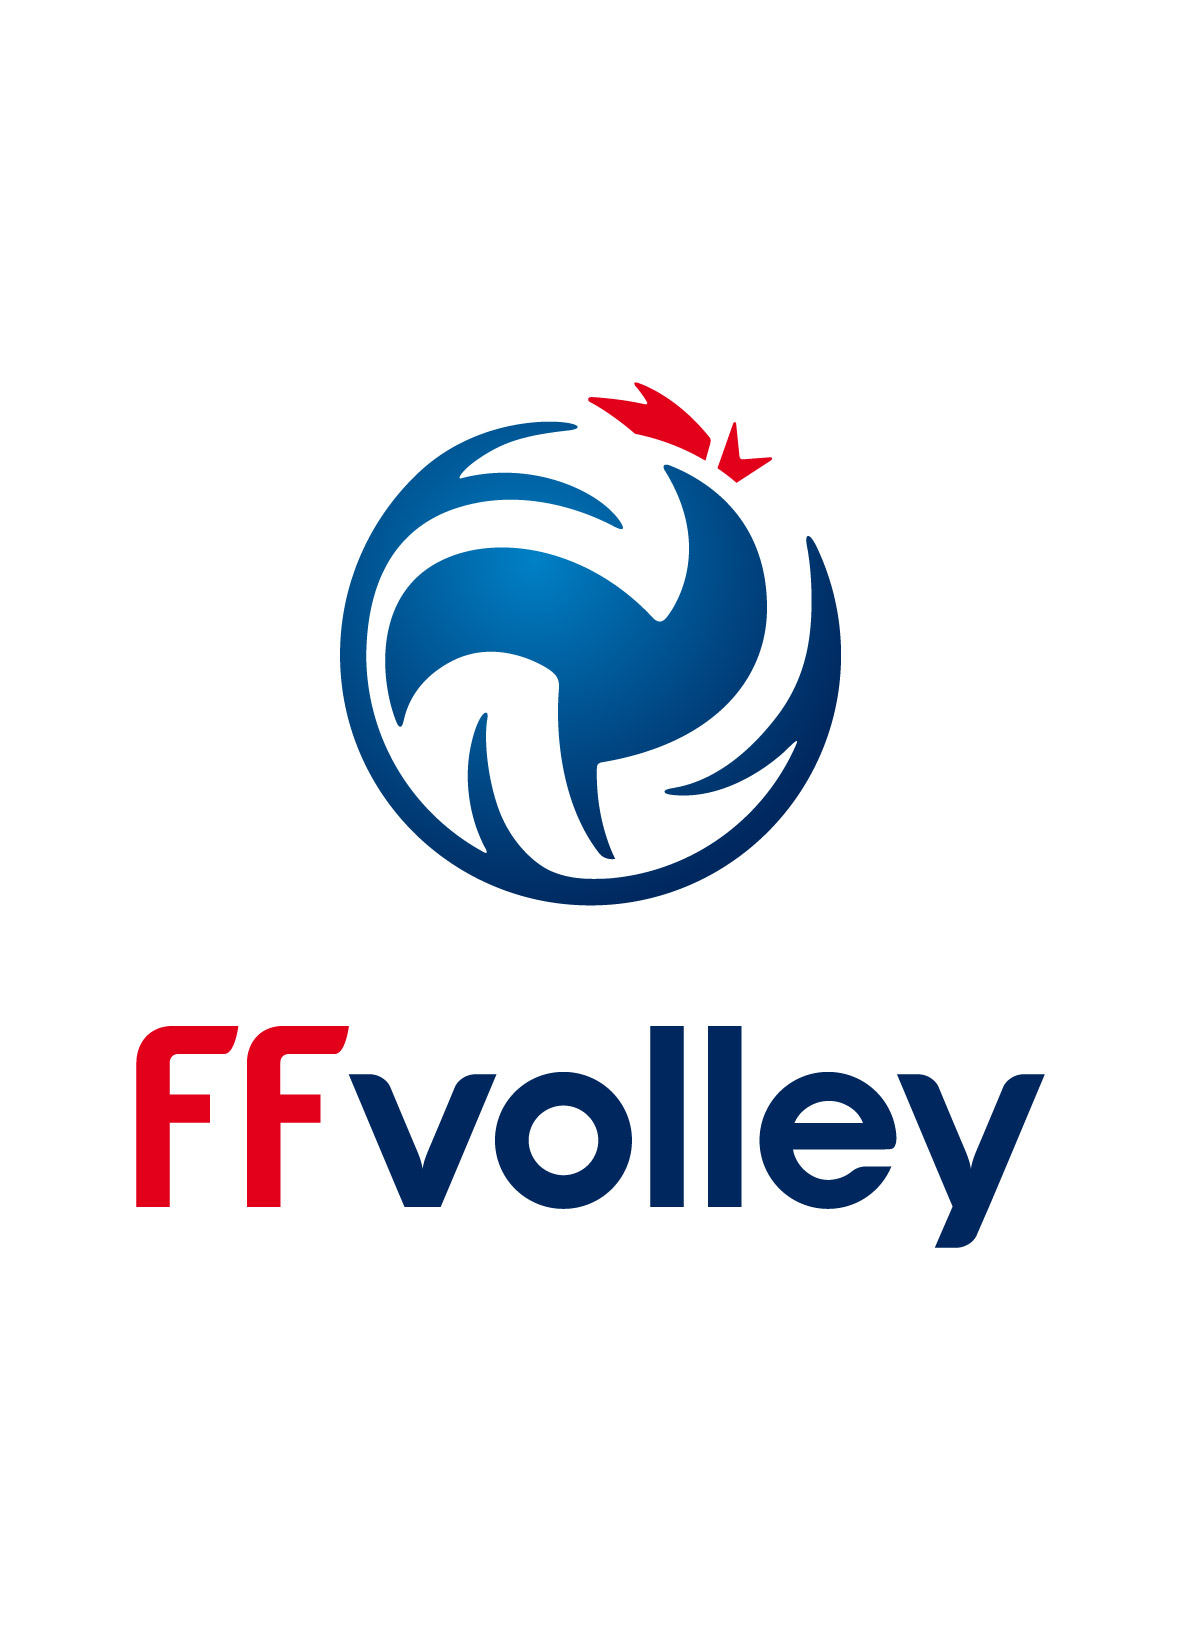 Fédération Française de Volley-Ball